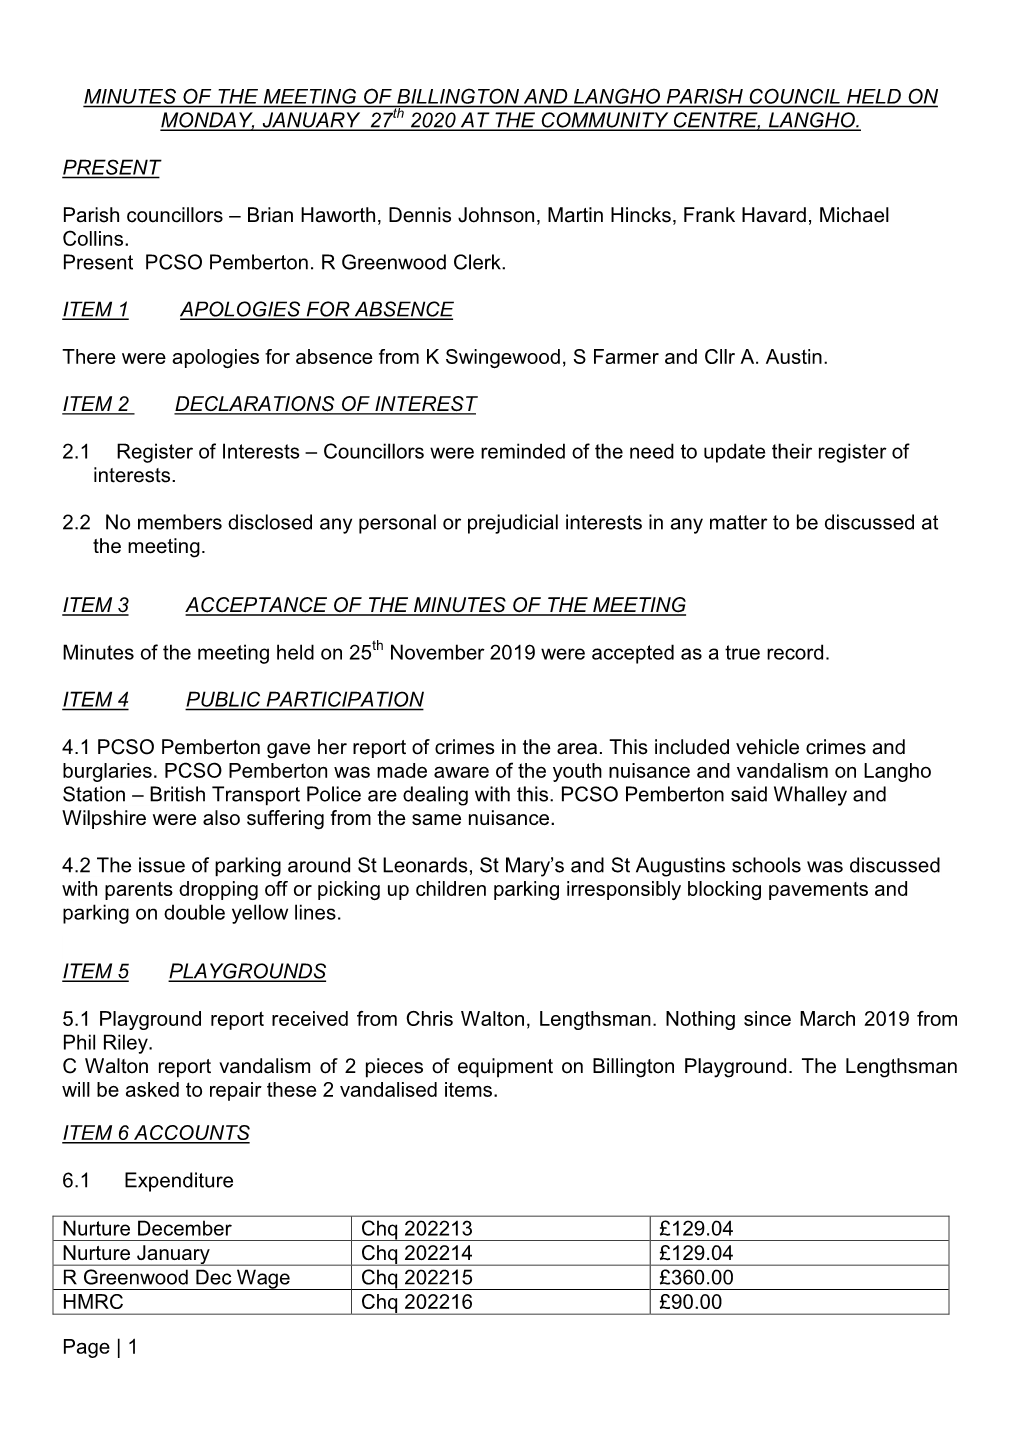 Parish Council Minutes 27Th January